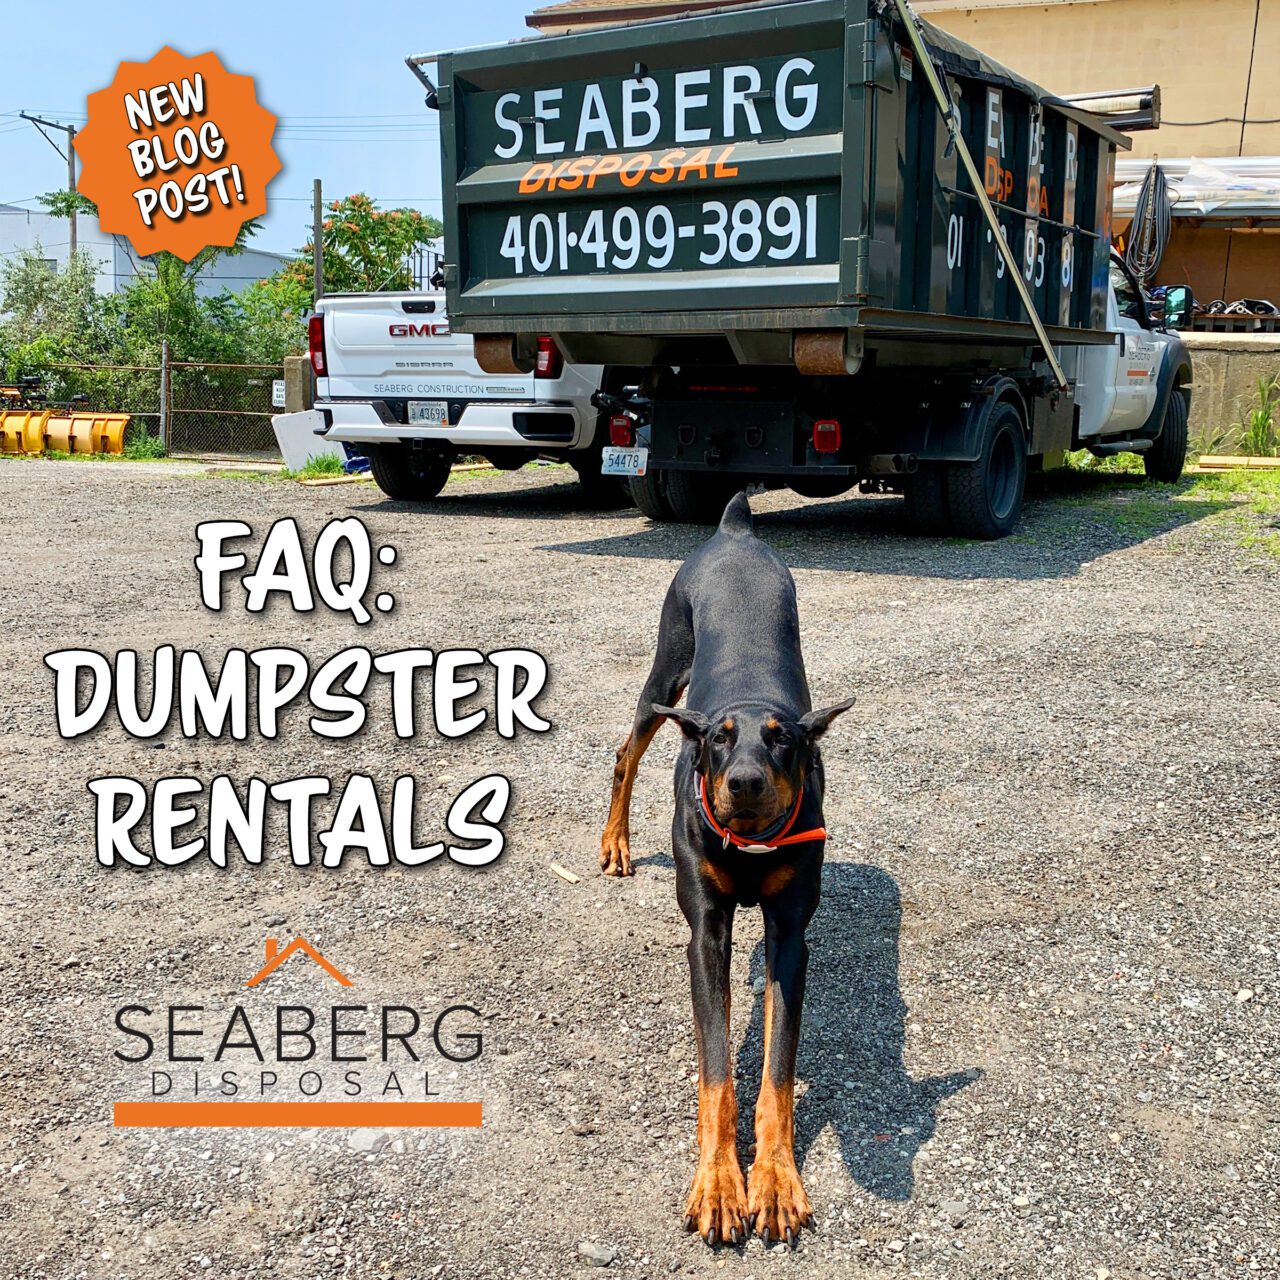 Seaberg Construction Blog: Dumpster Rental FAQ